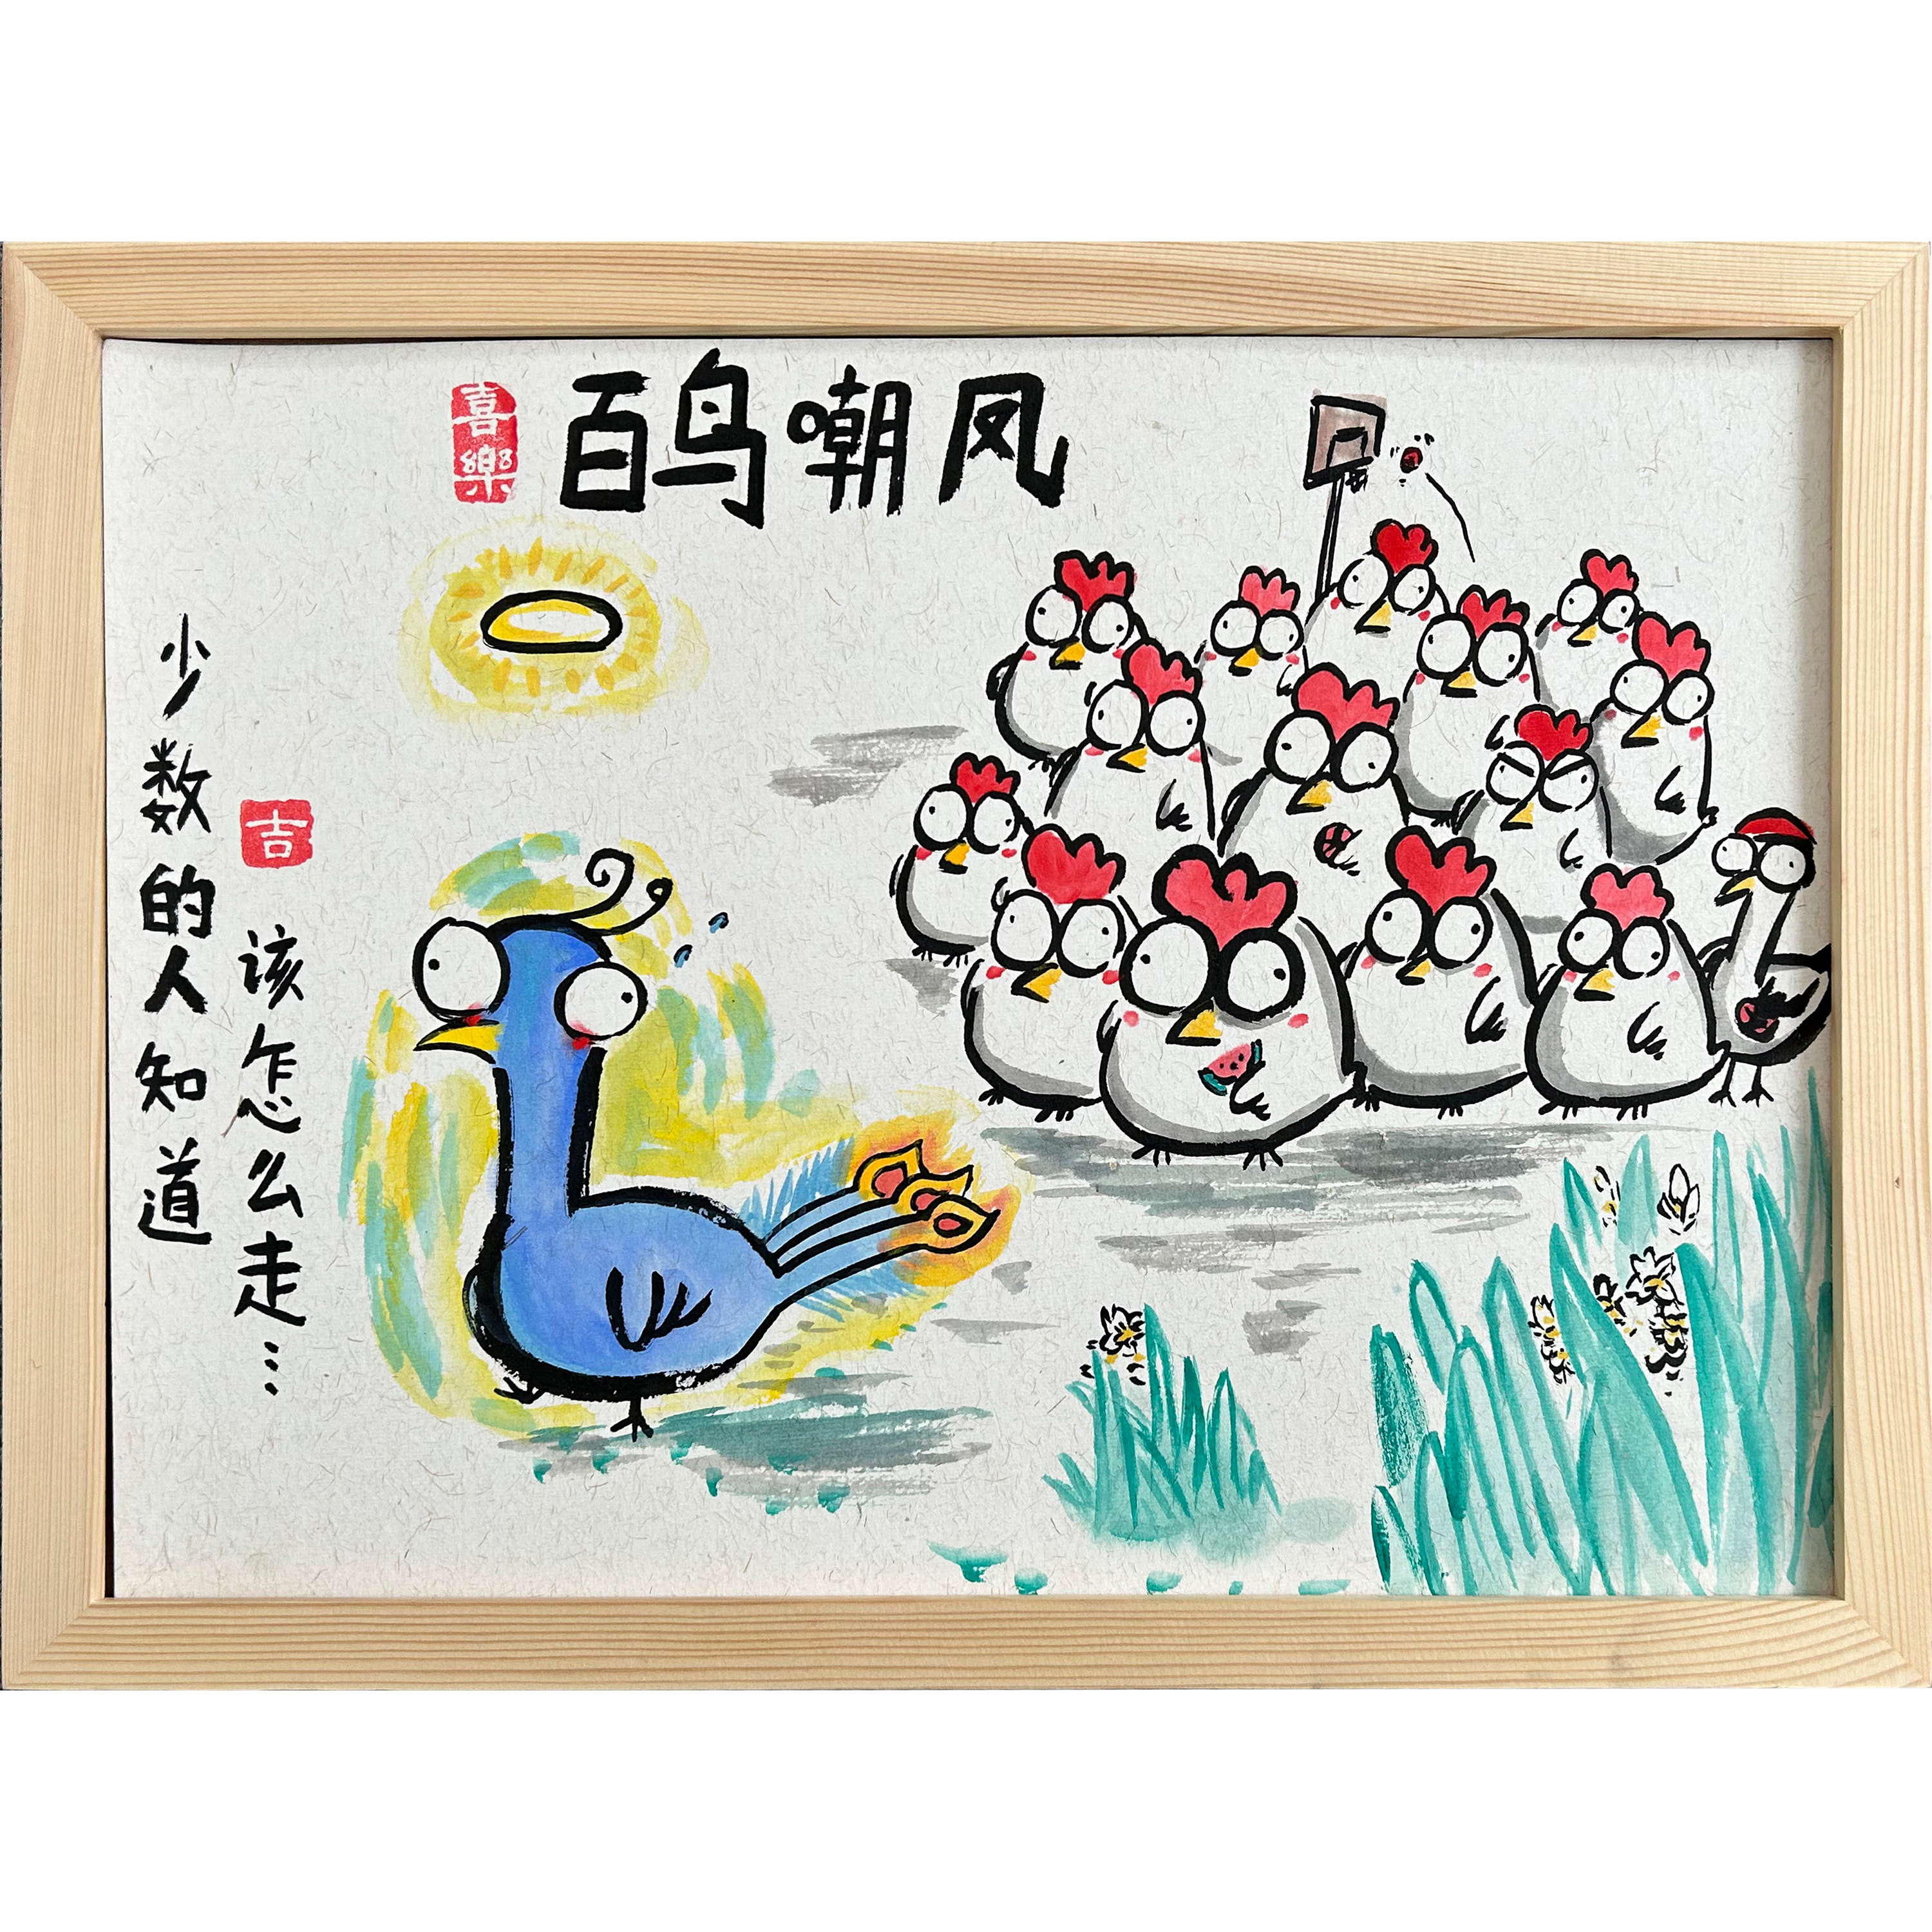 General 3000x3000 humor animals chickens peafowls digital art picture frames wood artwork herd Chinese kanji grass